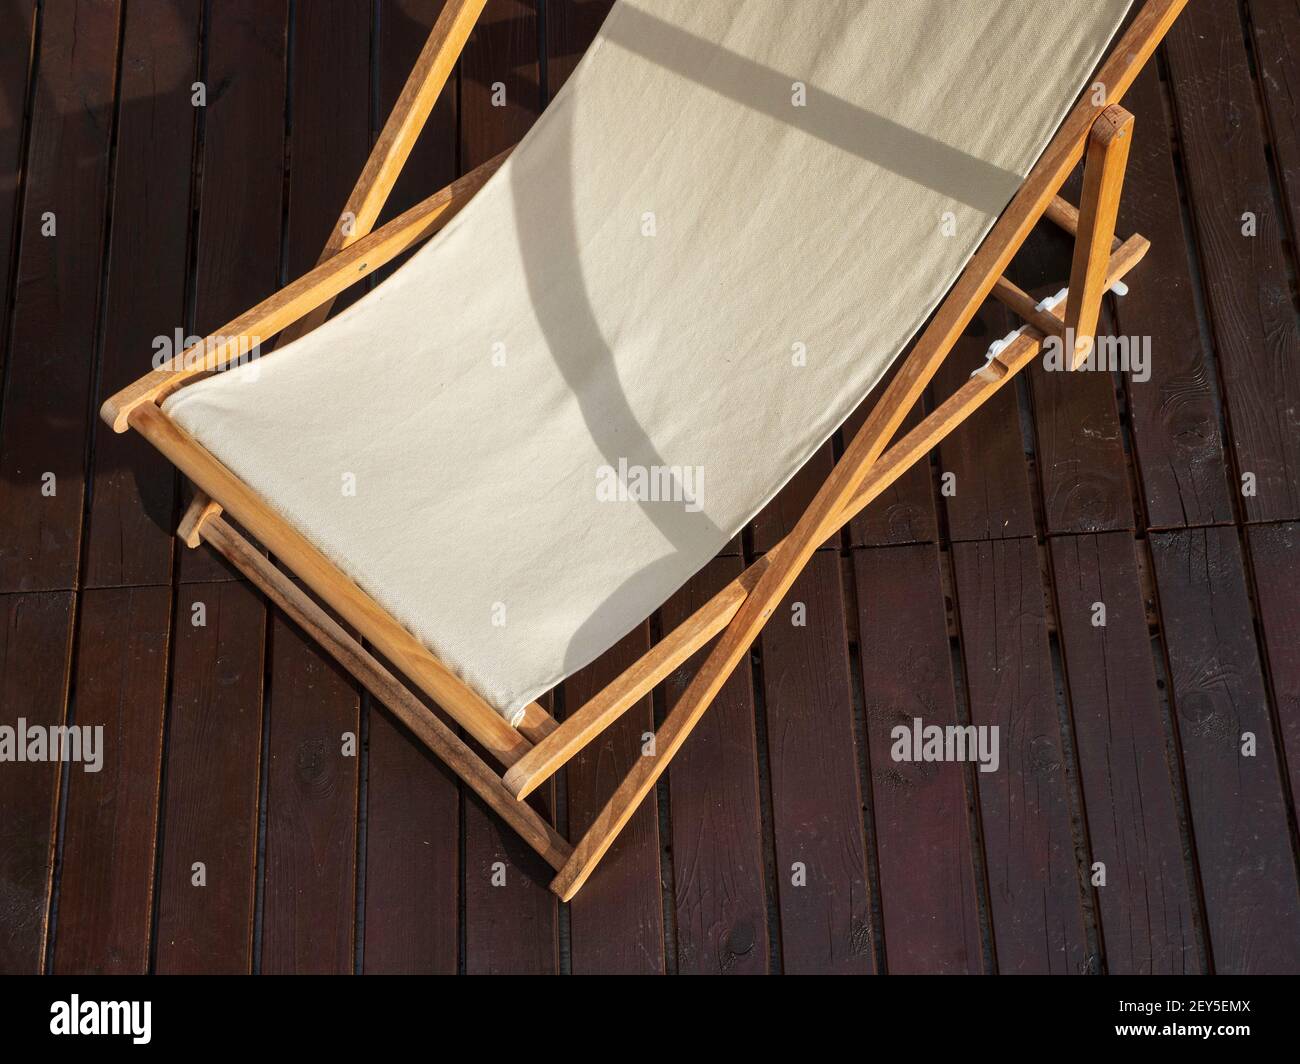 Fabric and wood hammock on parquet floor Stock Photo